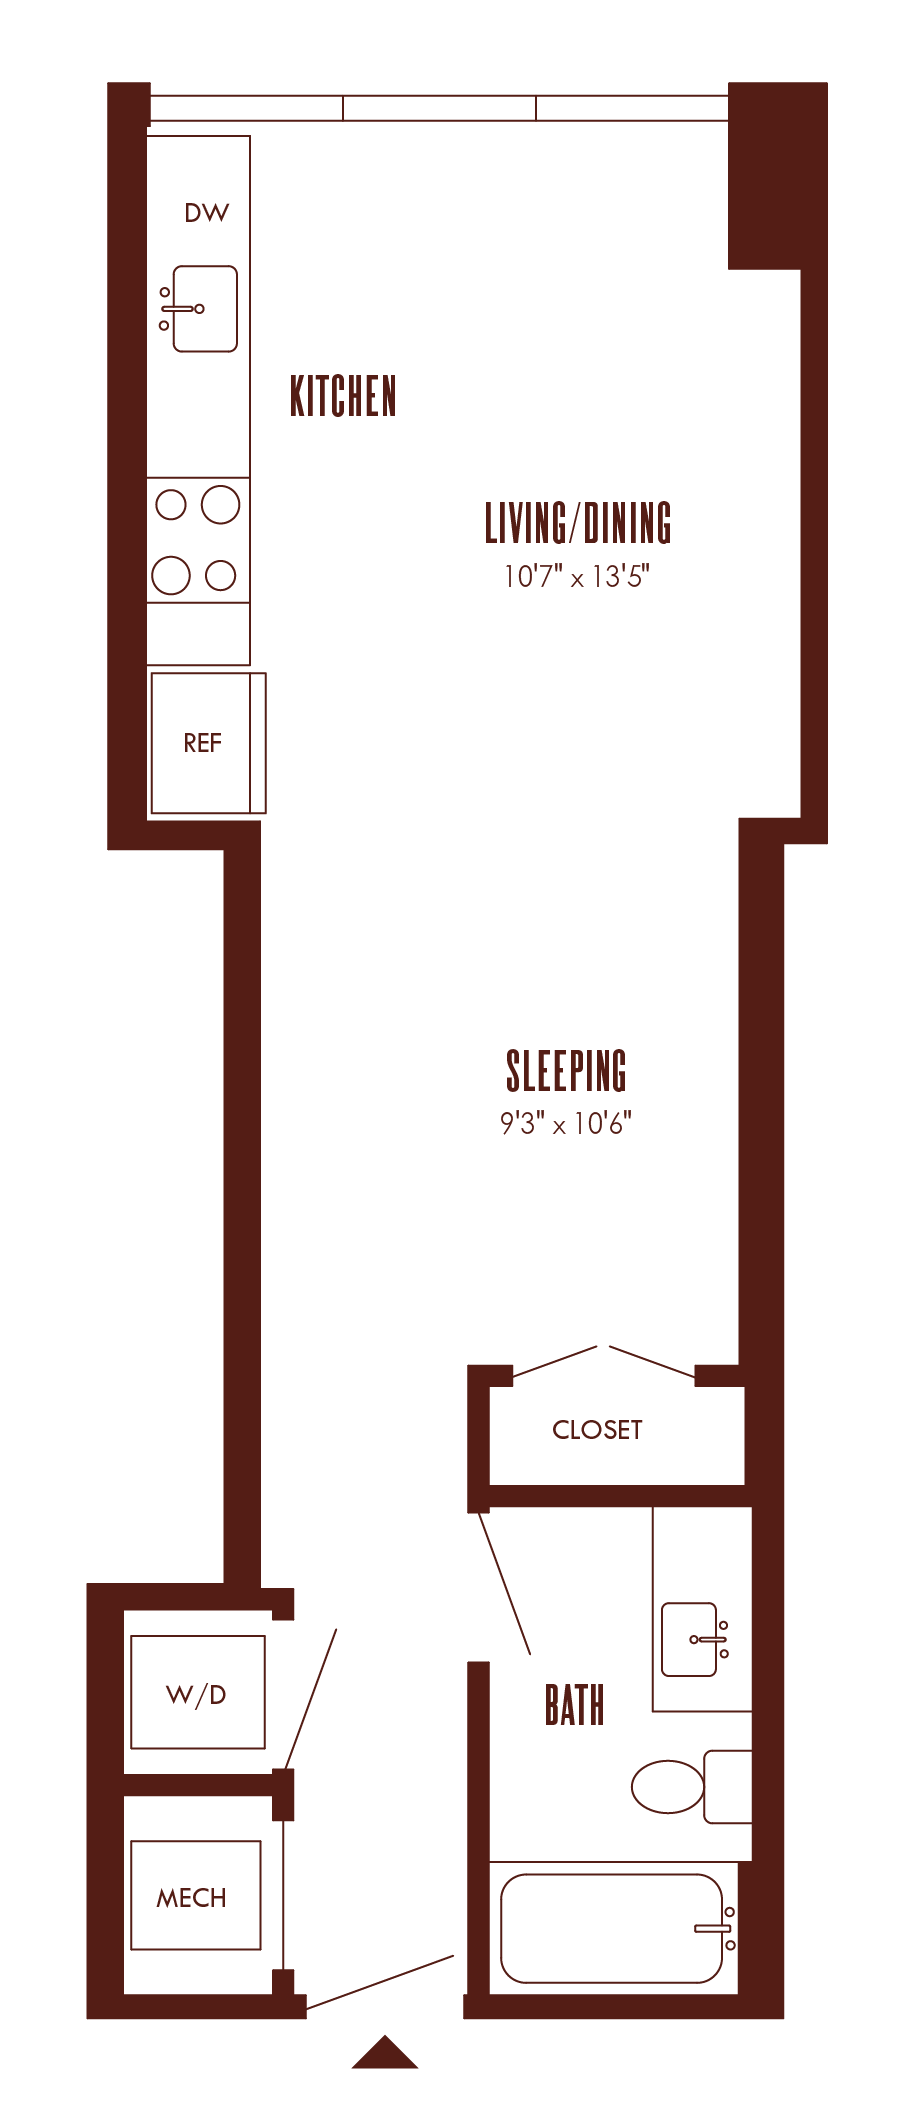 Floor Plan Image of Apartment Apt 21J